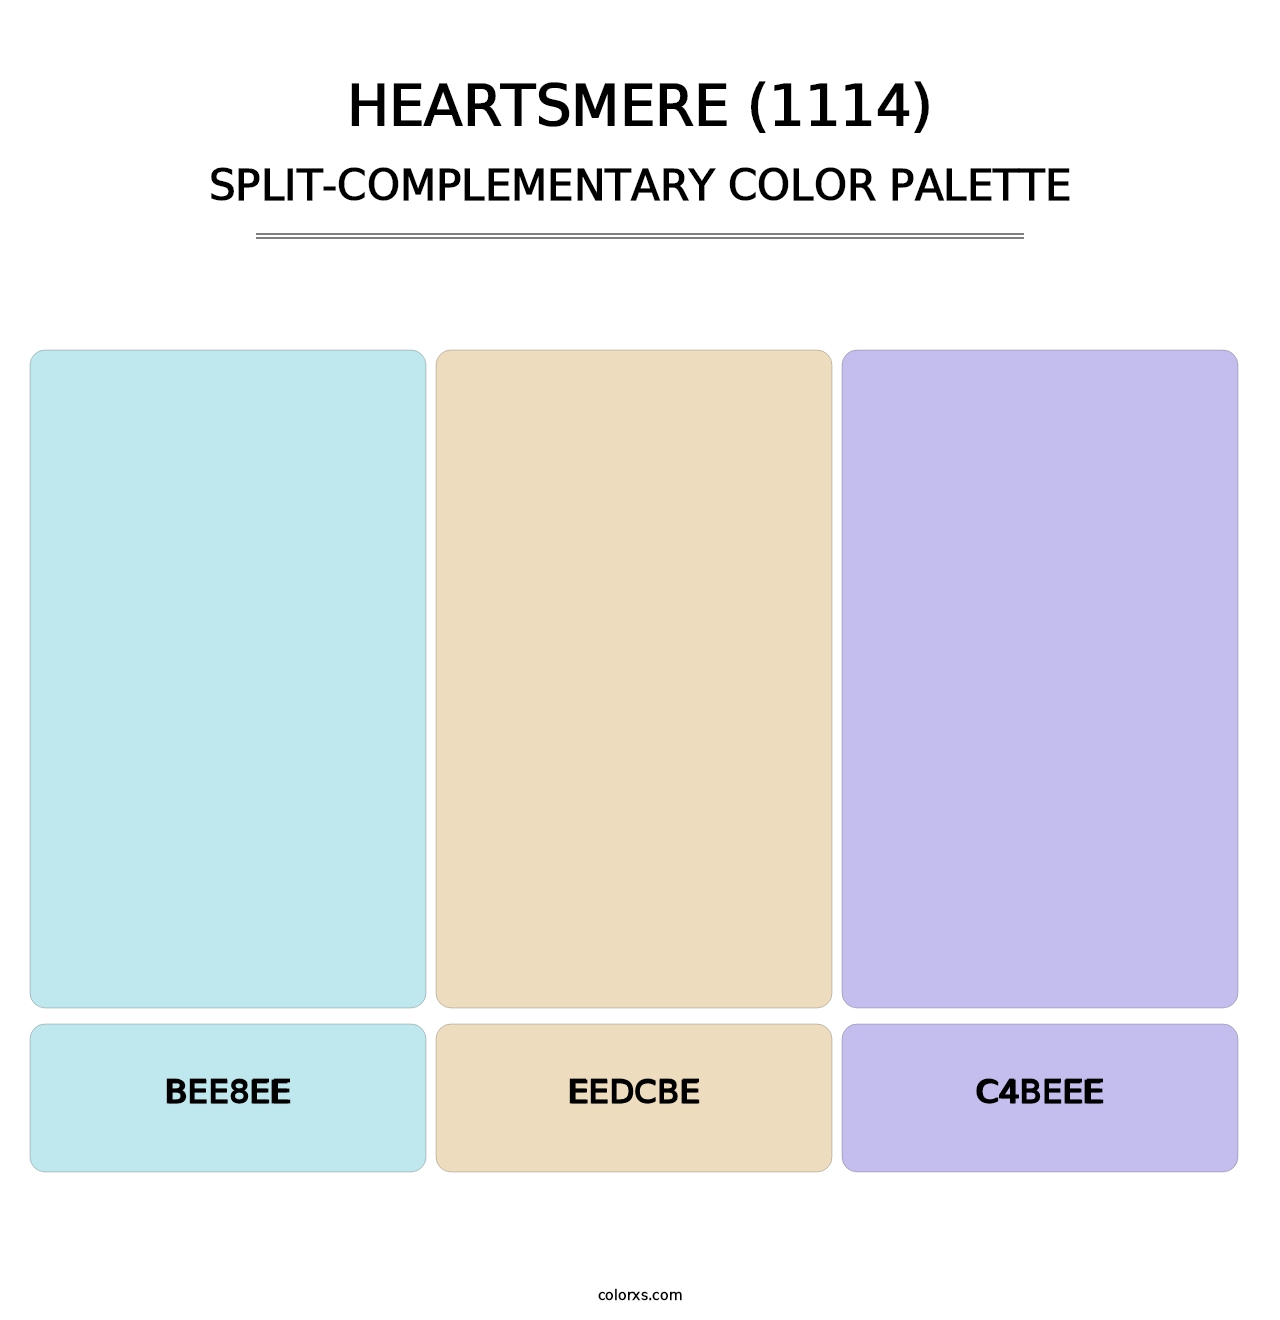 Heartsmere (1114) - Split-Complementary Color Palette